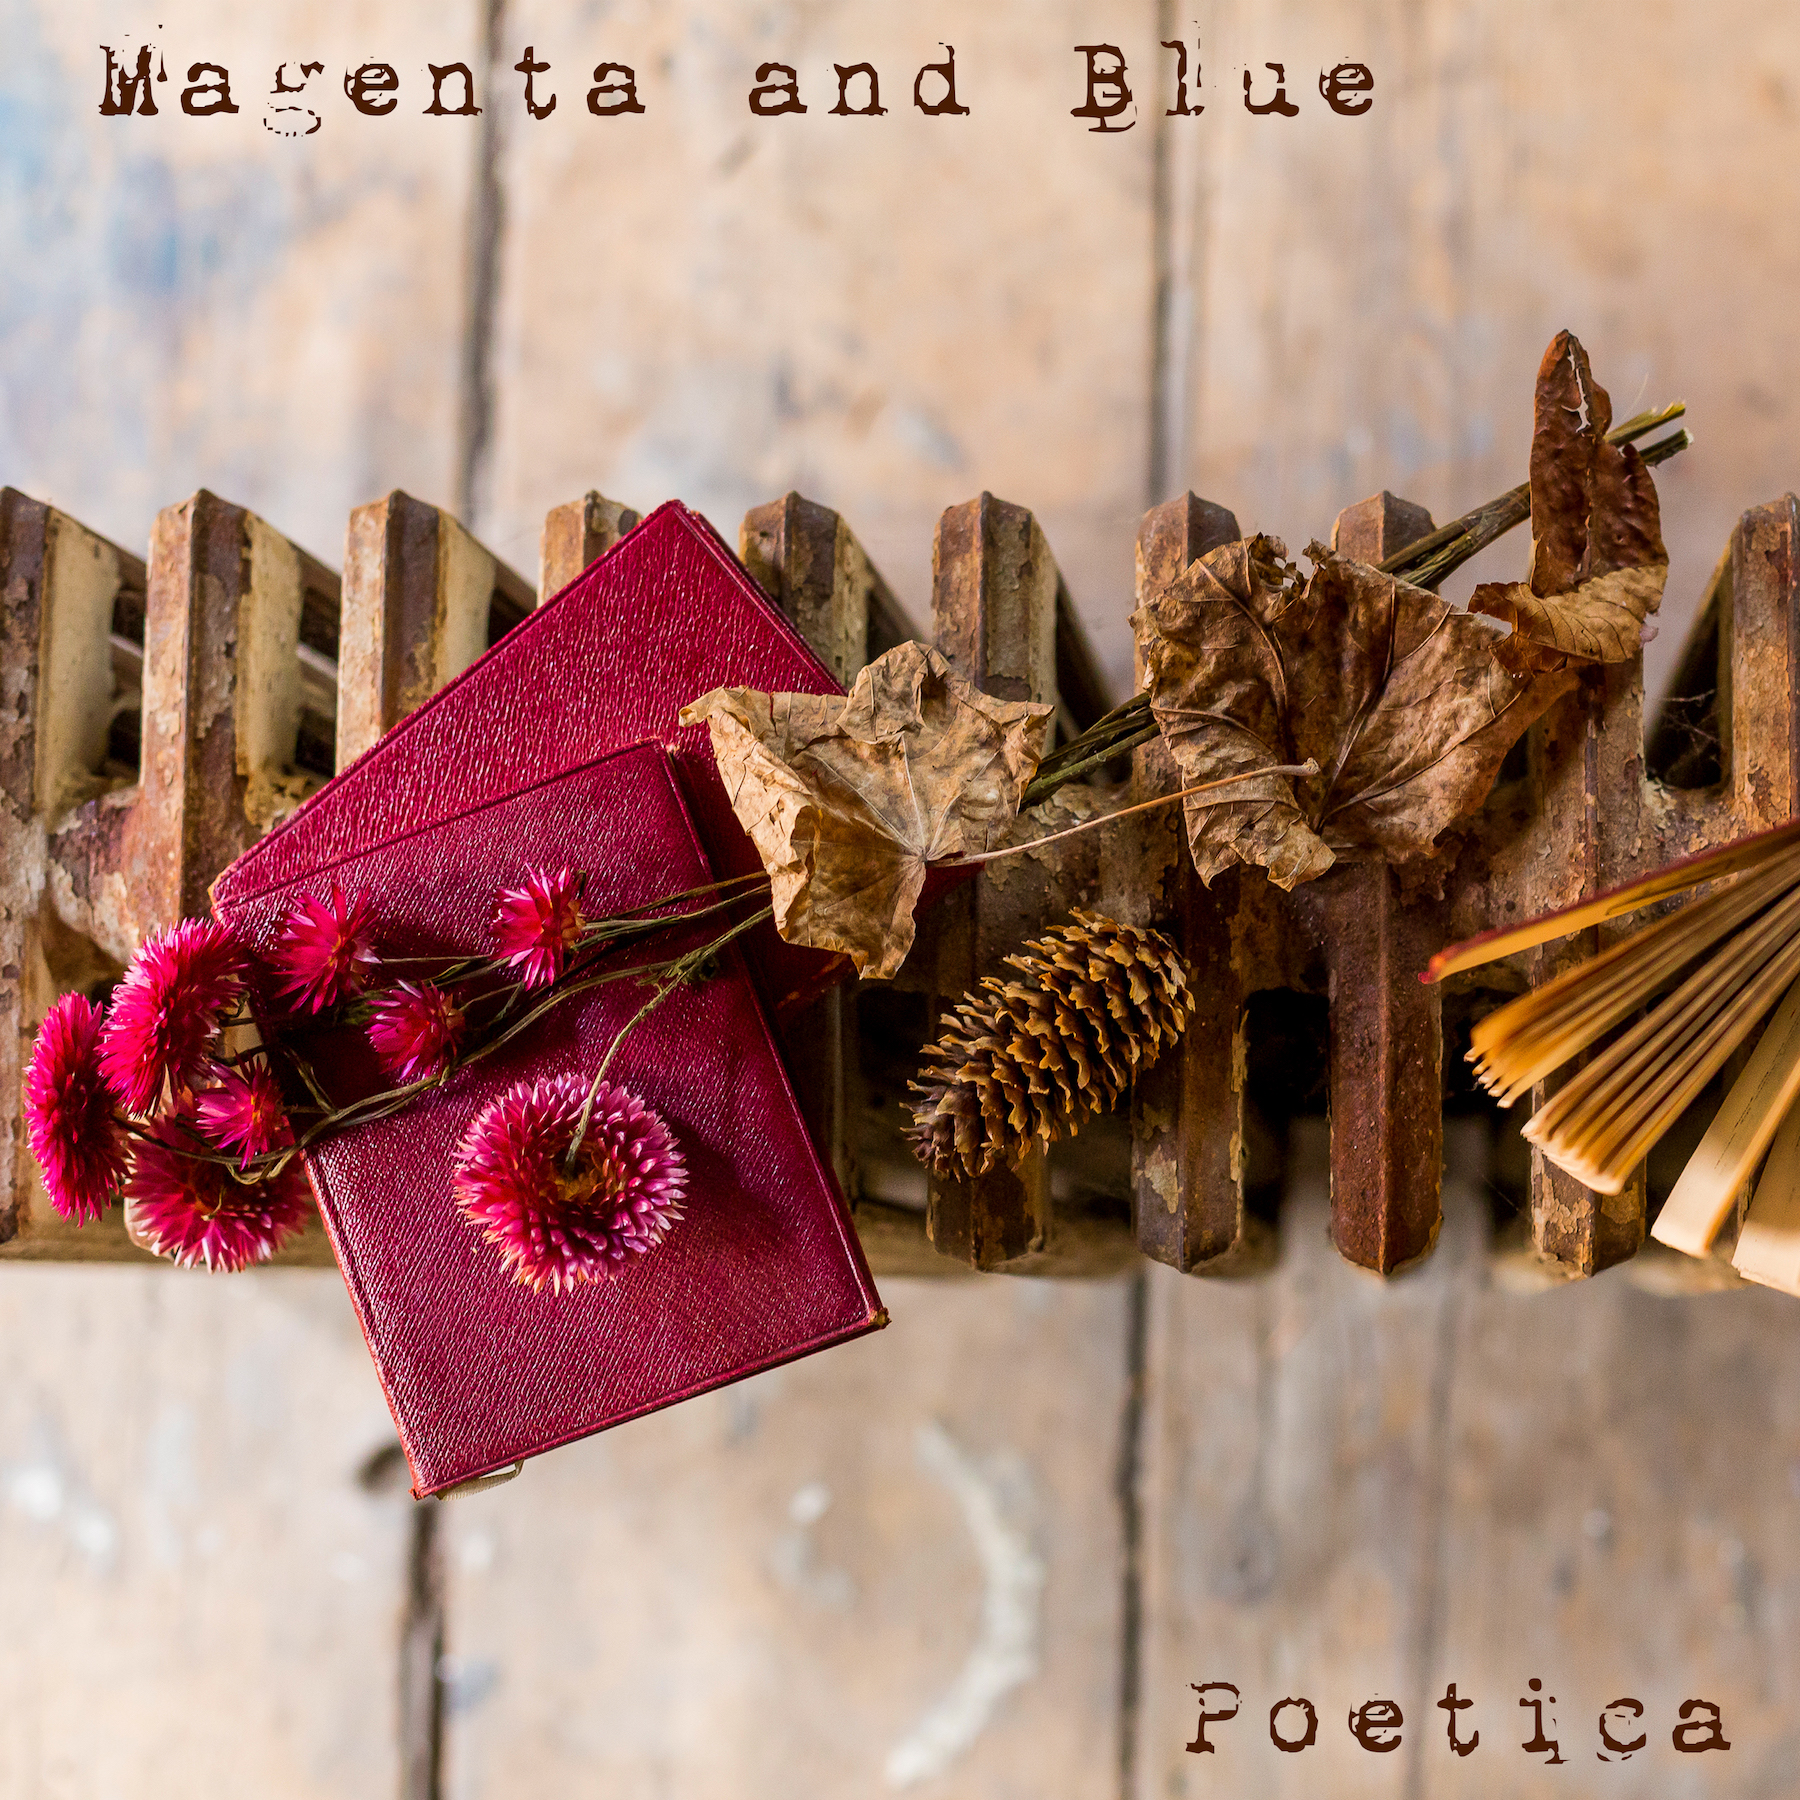 Poetica - Magenta and Blue